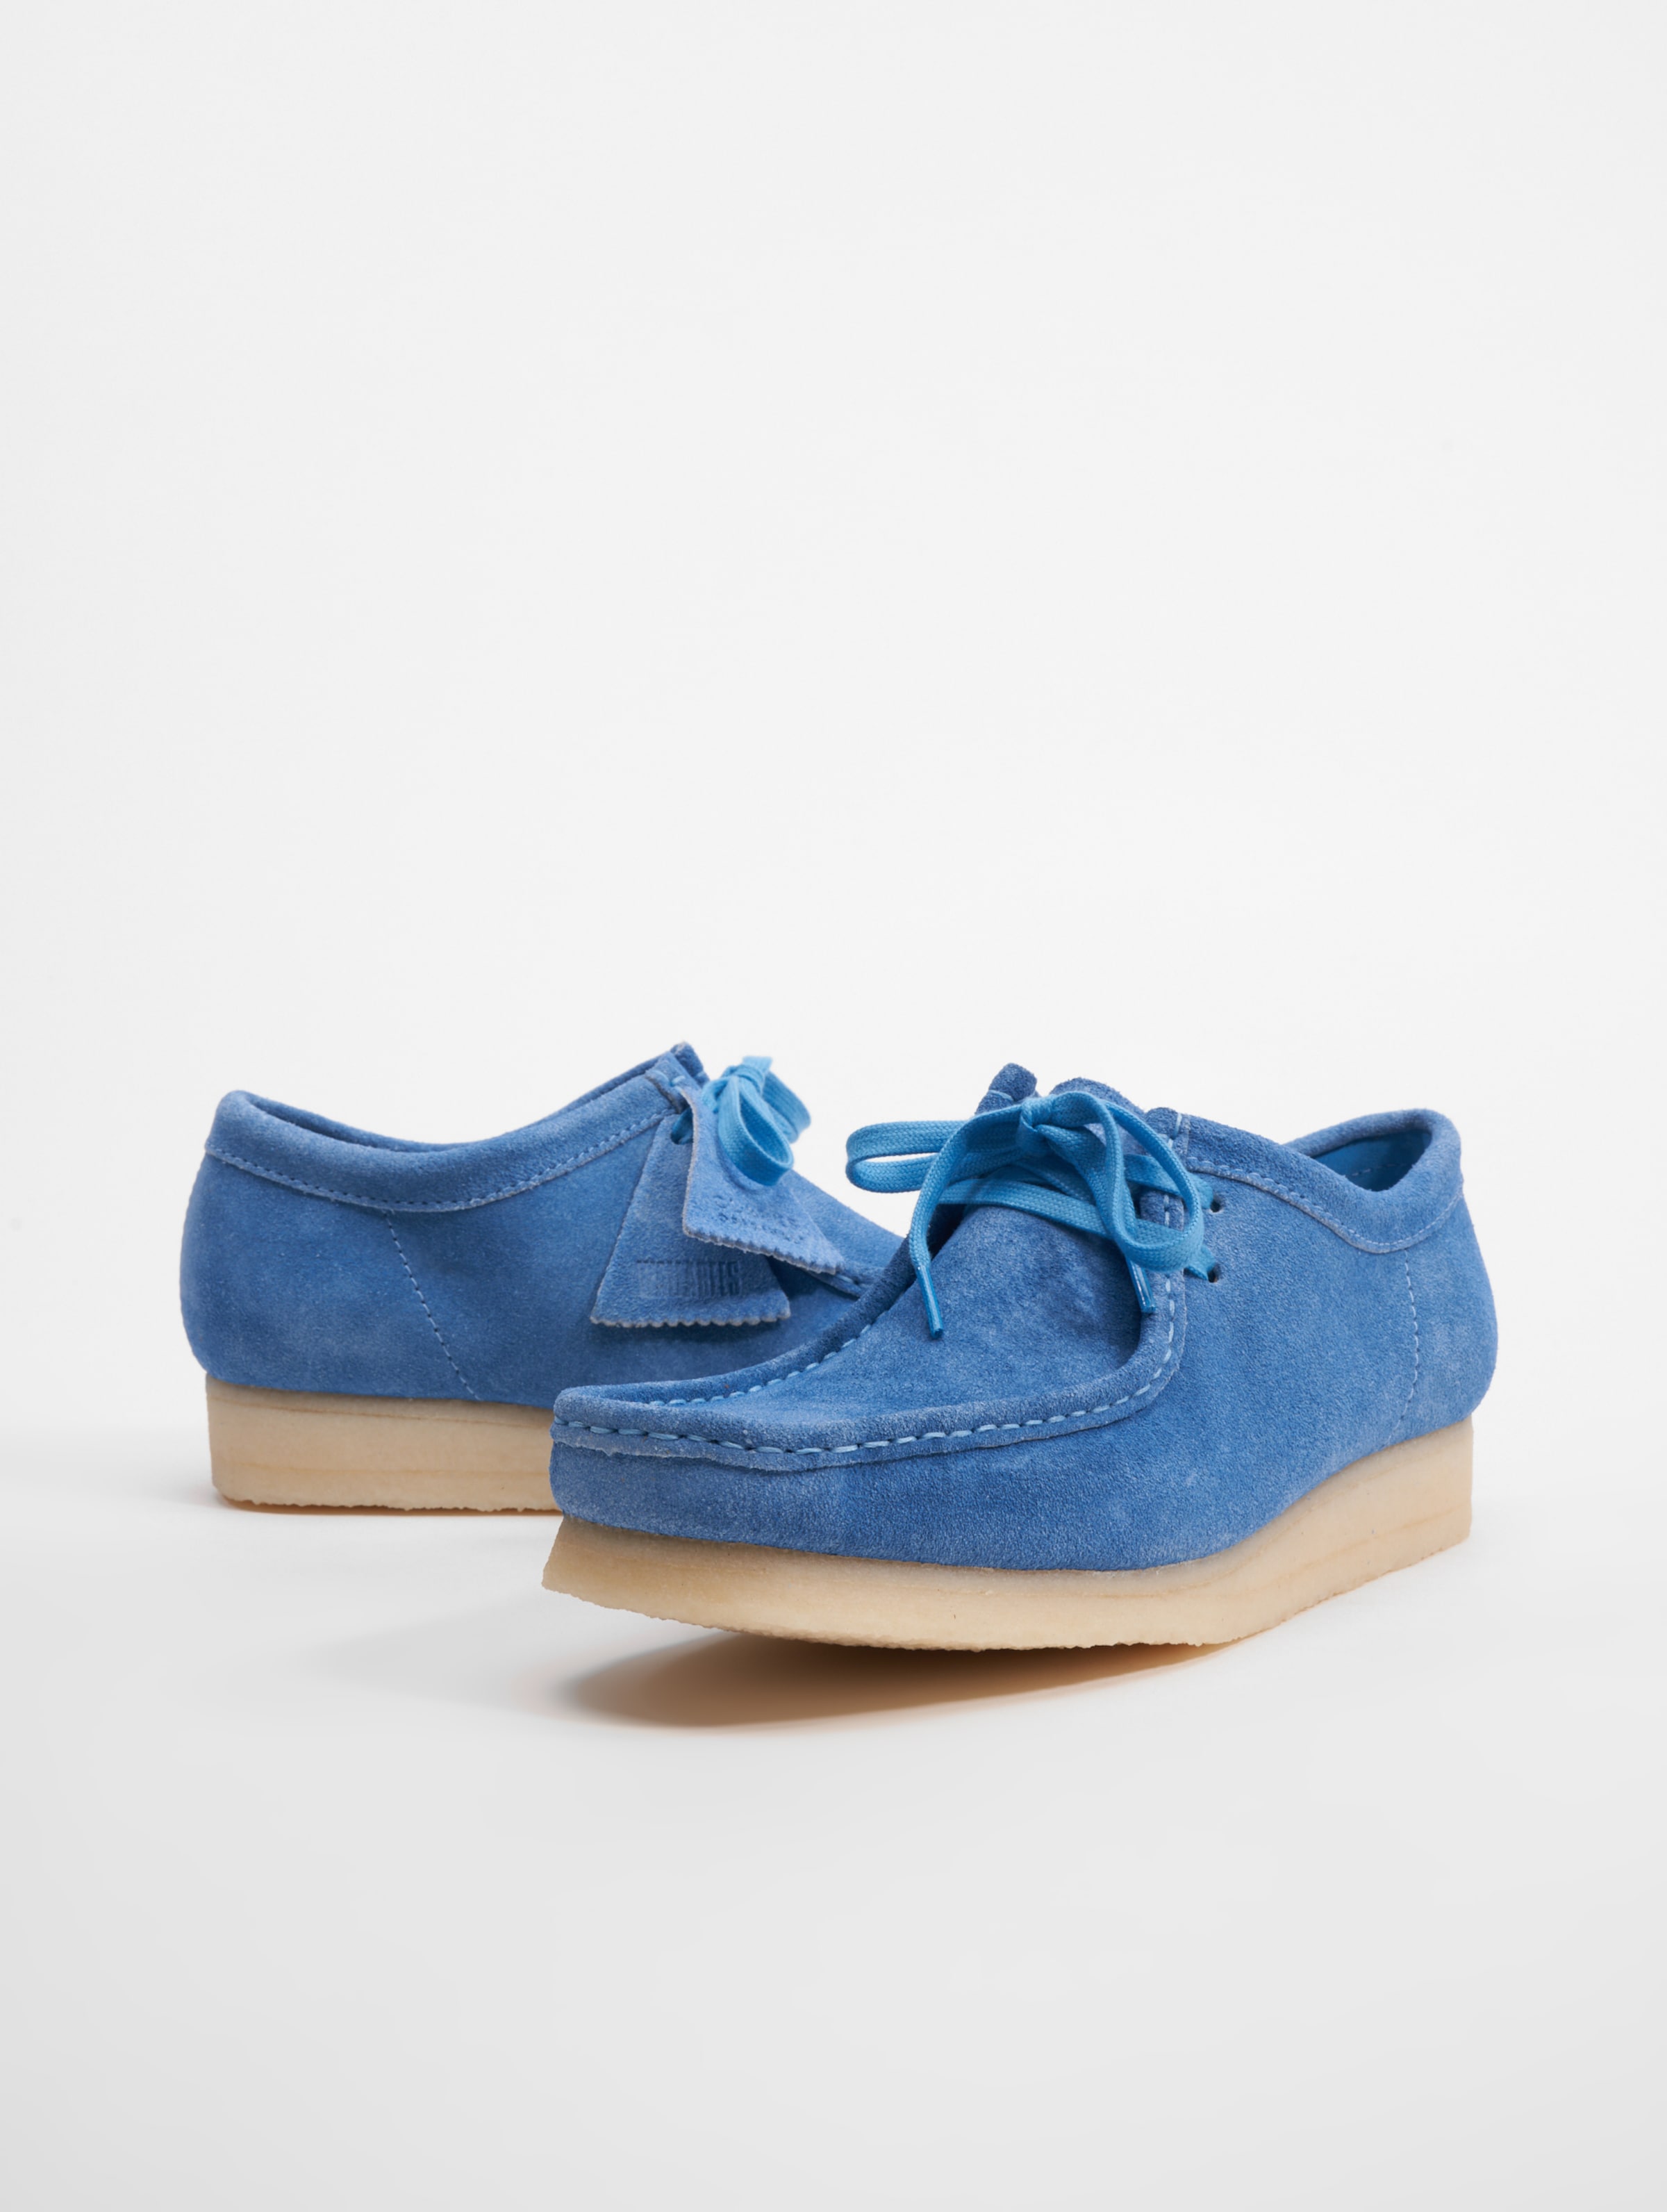 Clarks Originals Wallabee Schuhe Männer,Unisex op kleur blauw, Maat 45